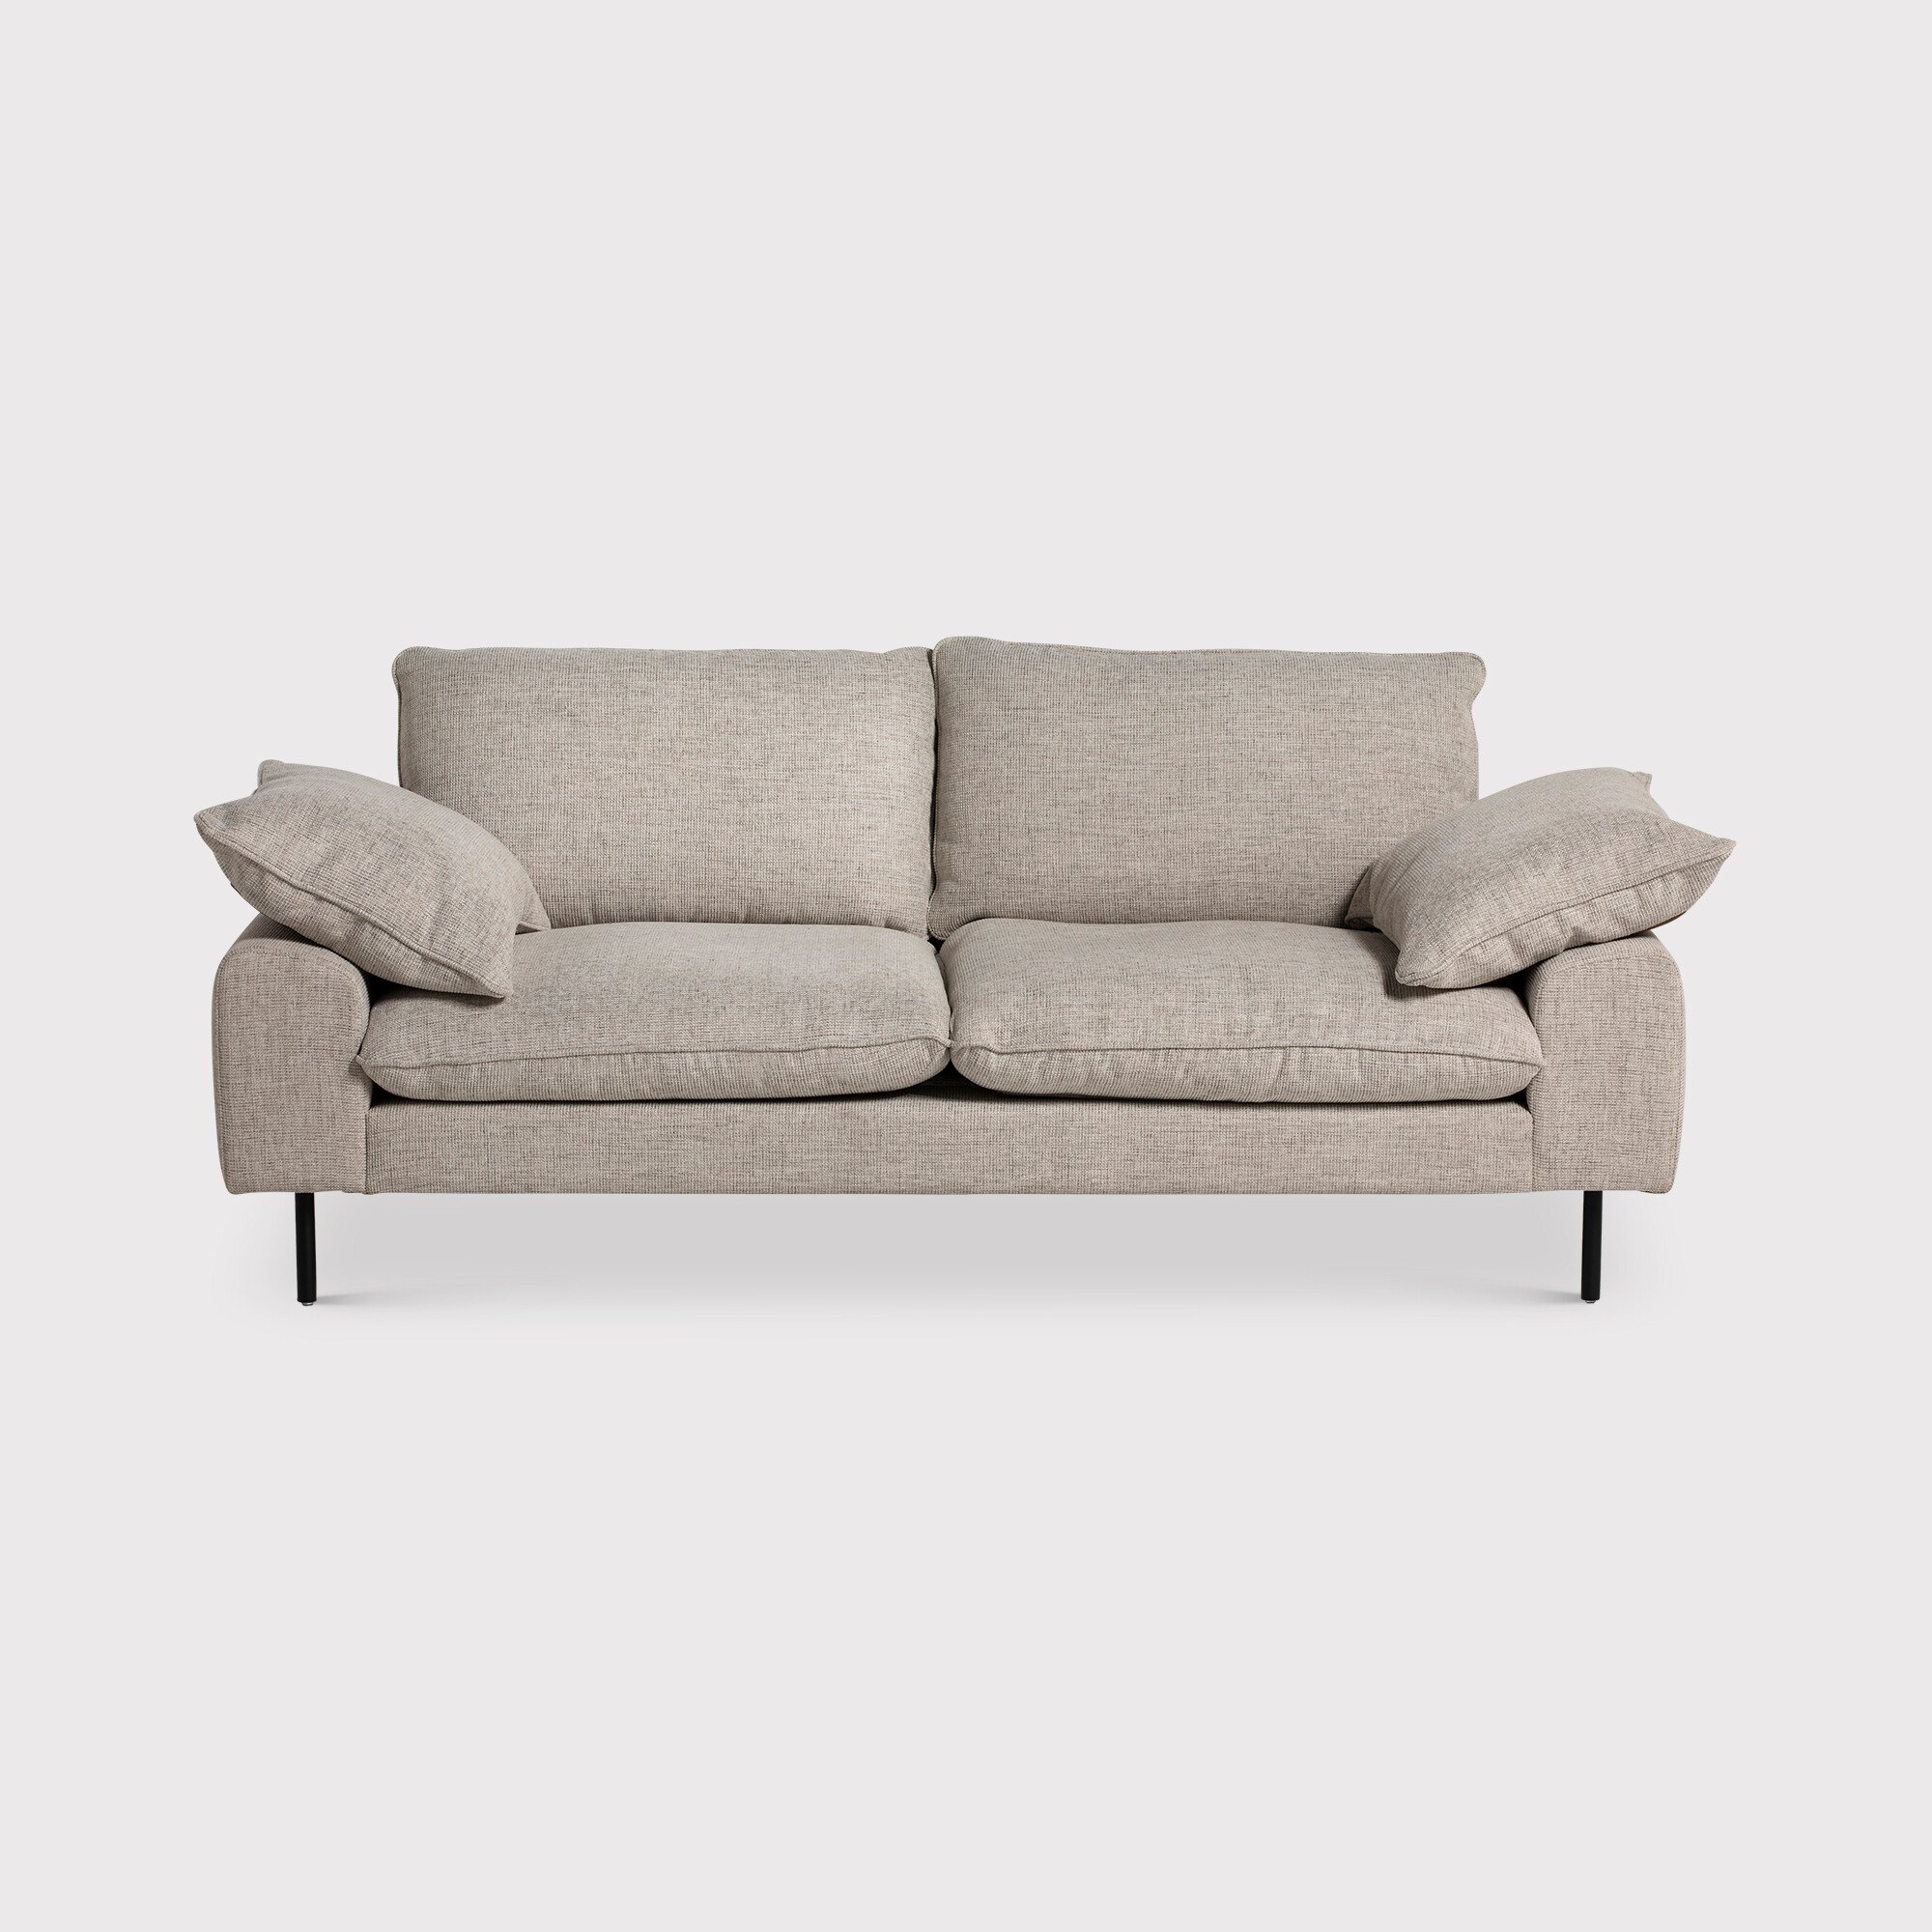 Titan 2.5 Seater Sofa, Neutral | Barker & Stonehouse